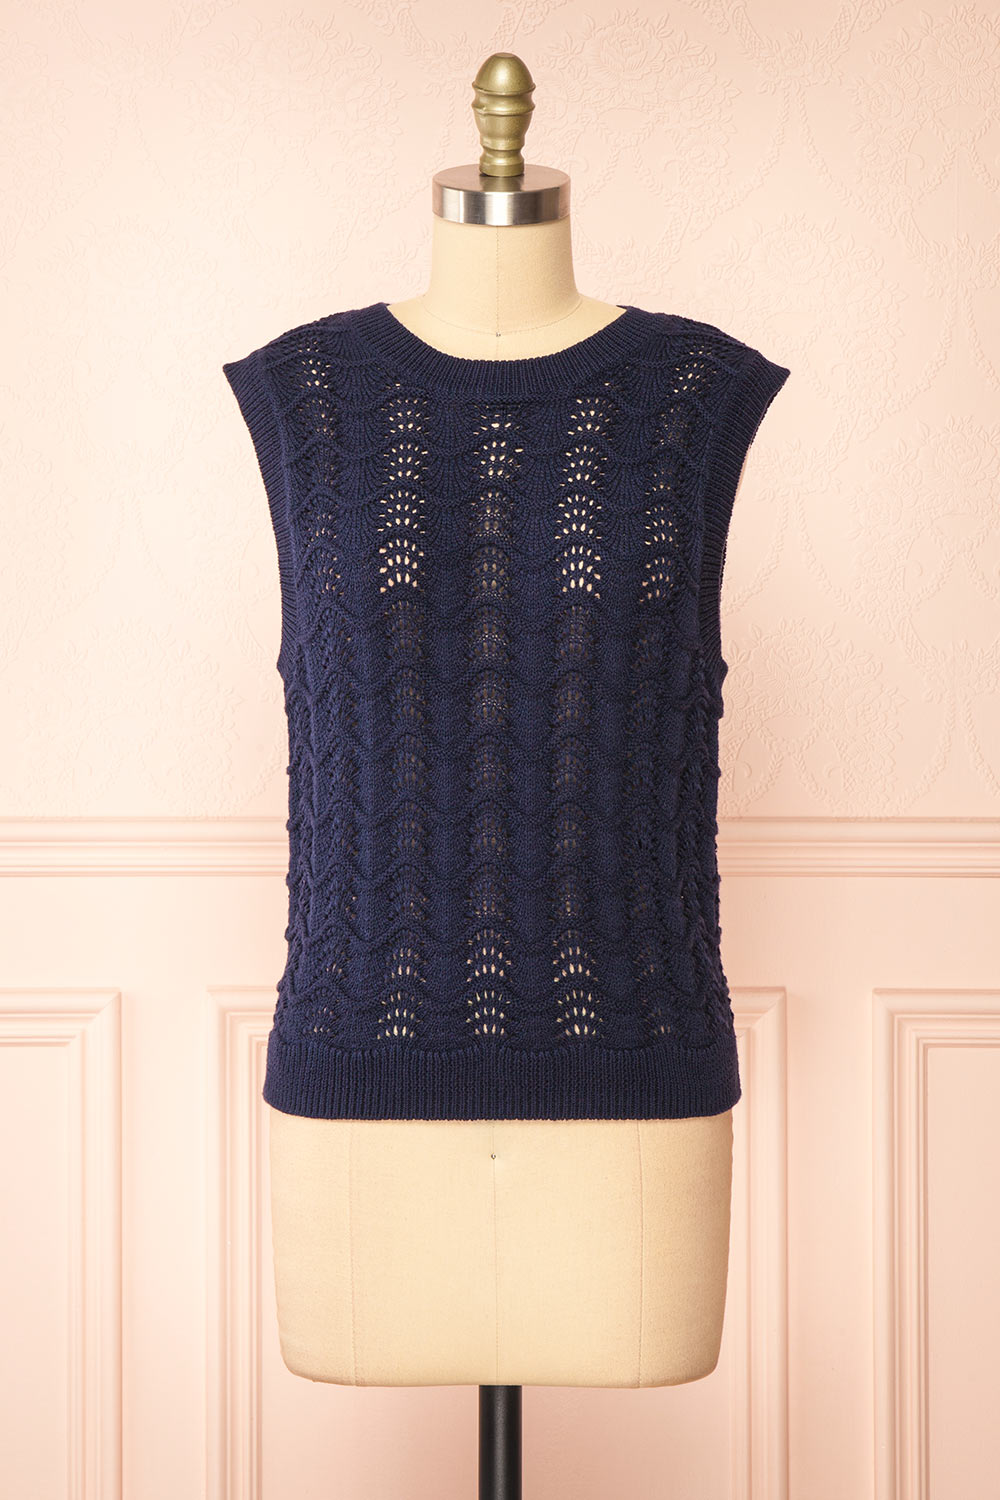 Harim Navy Openwork Knit Sweater Vest | Boutique 1861 front view